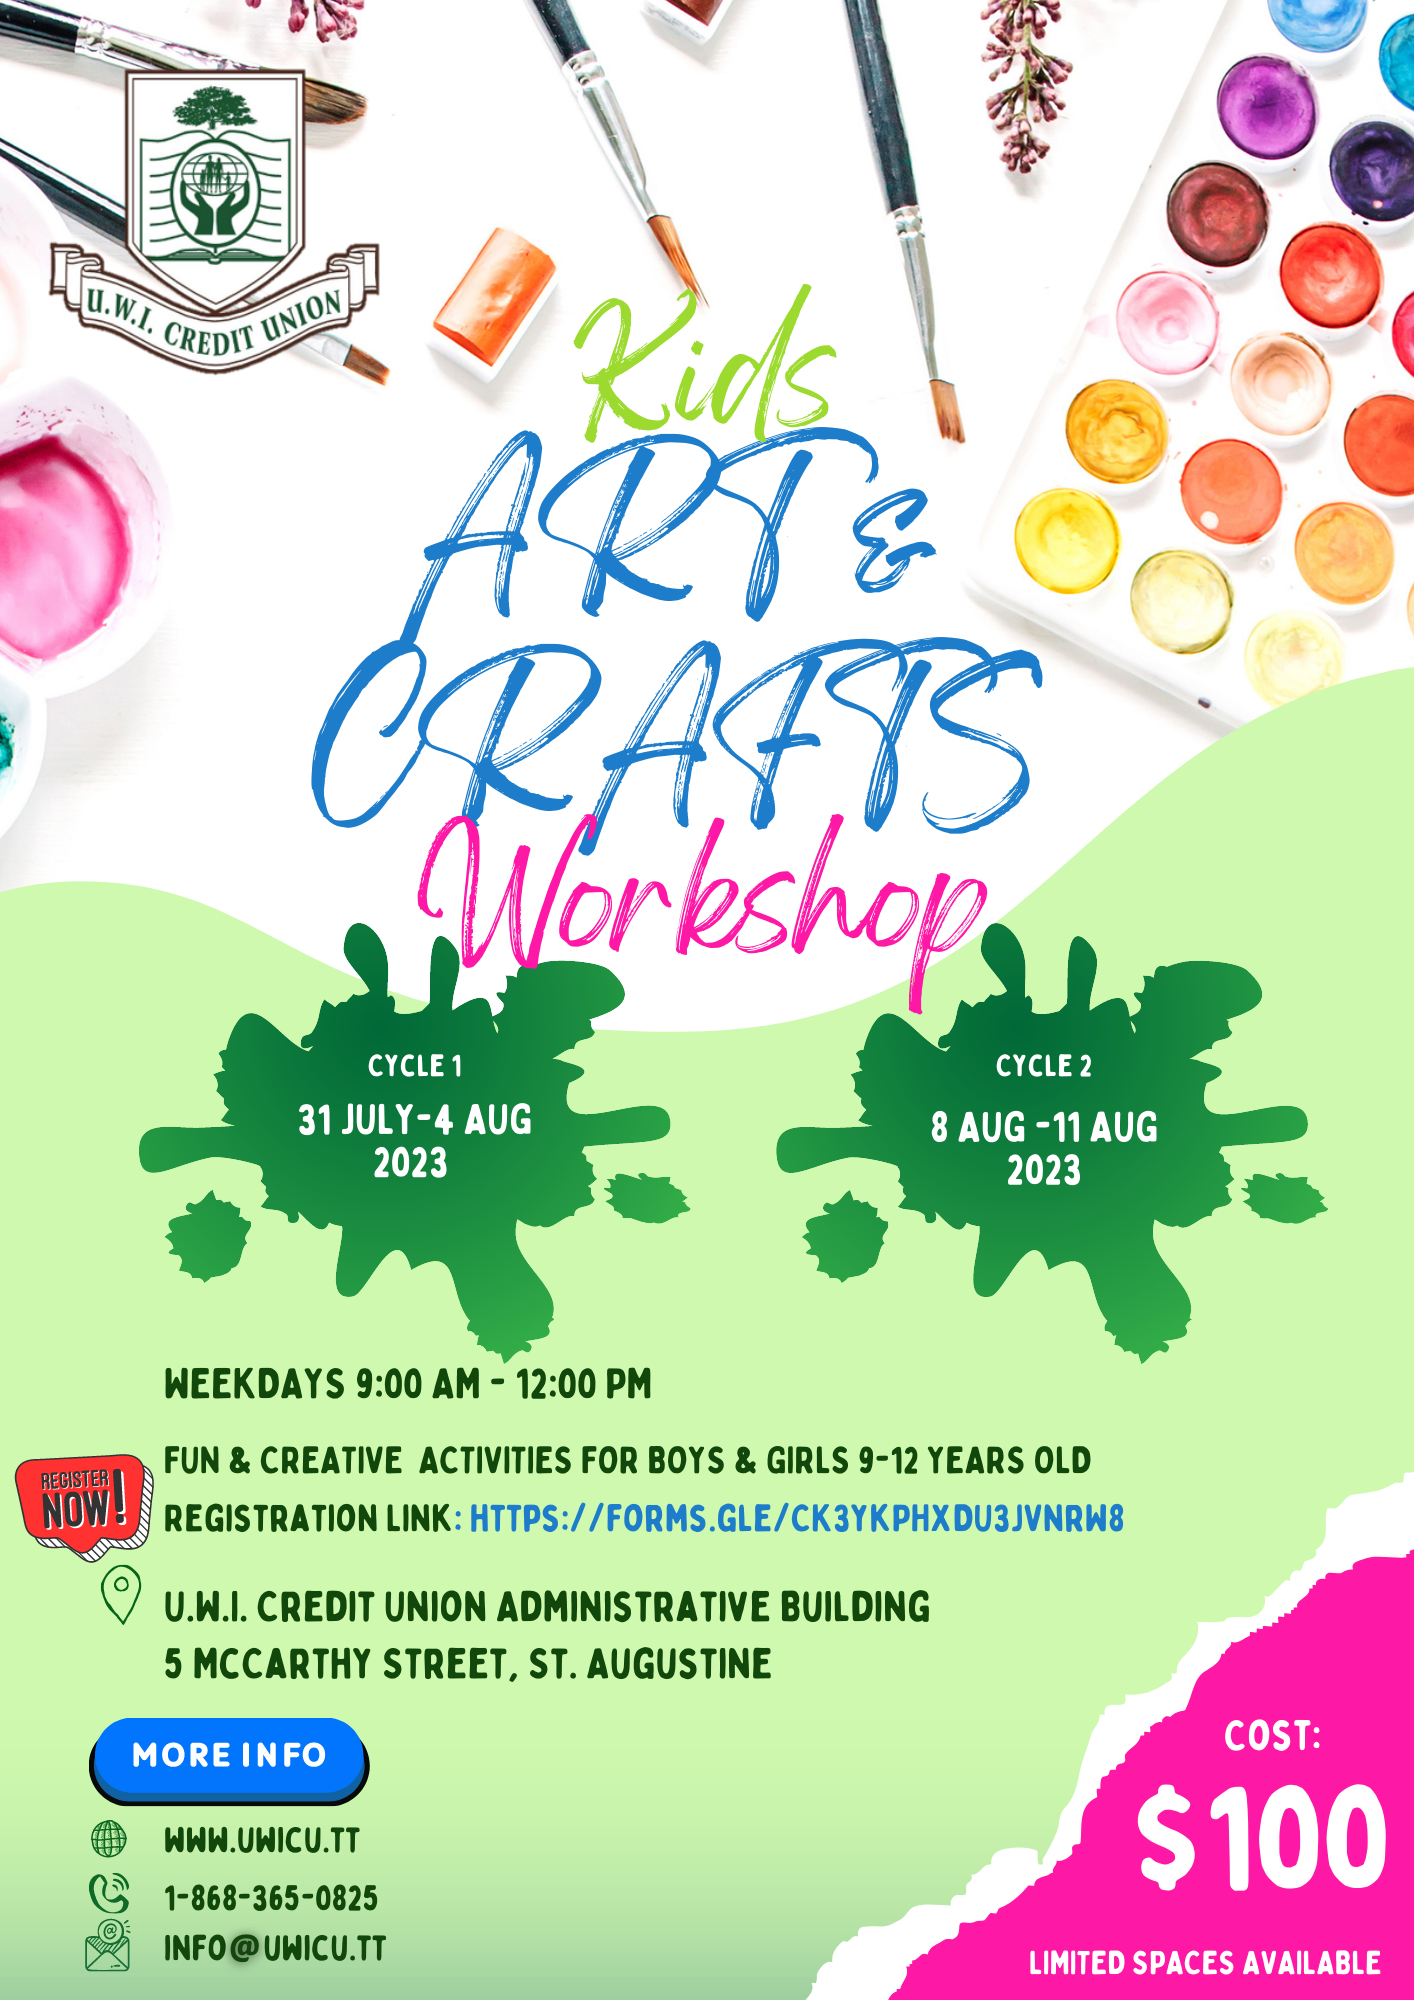 UWICU KIDS ART & CRAFTS WORKSHOP | UWI Credit Union